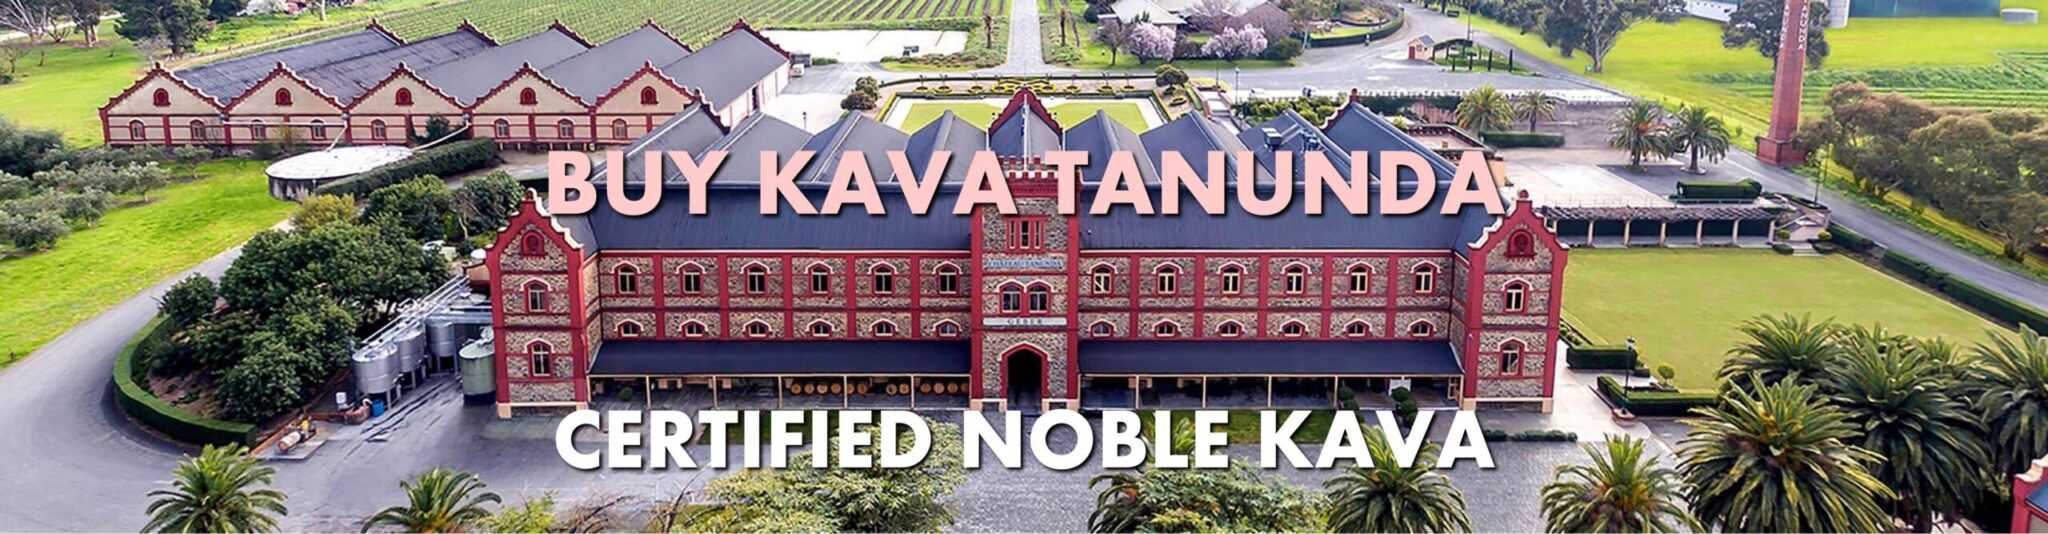 Chateau Tanunda in Barossa Valley South Australia with caption Buy Kava Tanunda Certified Noble Kava